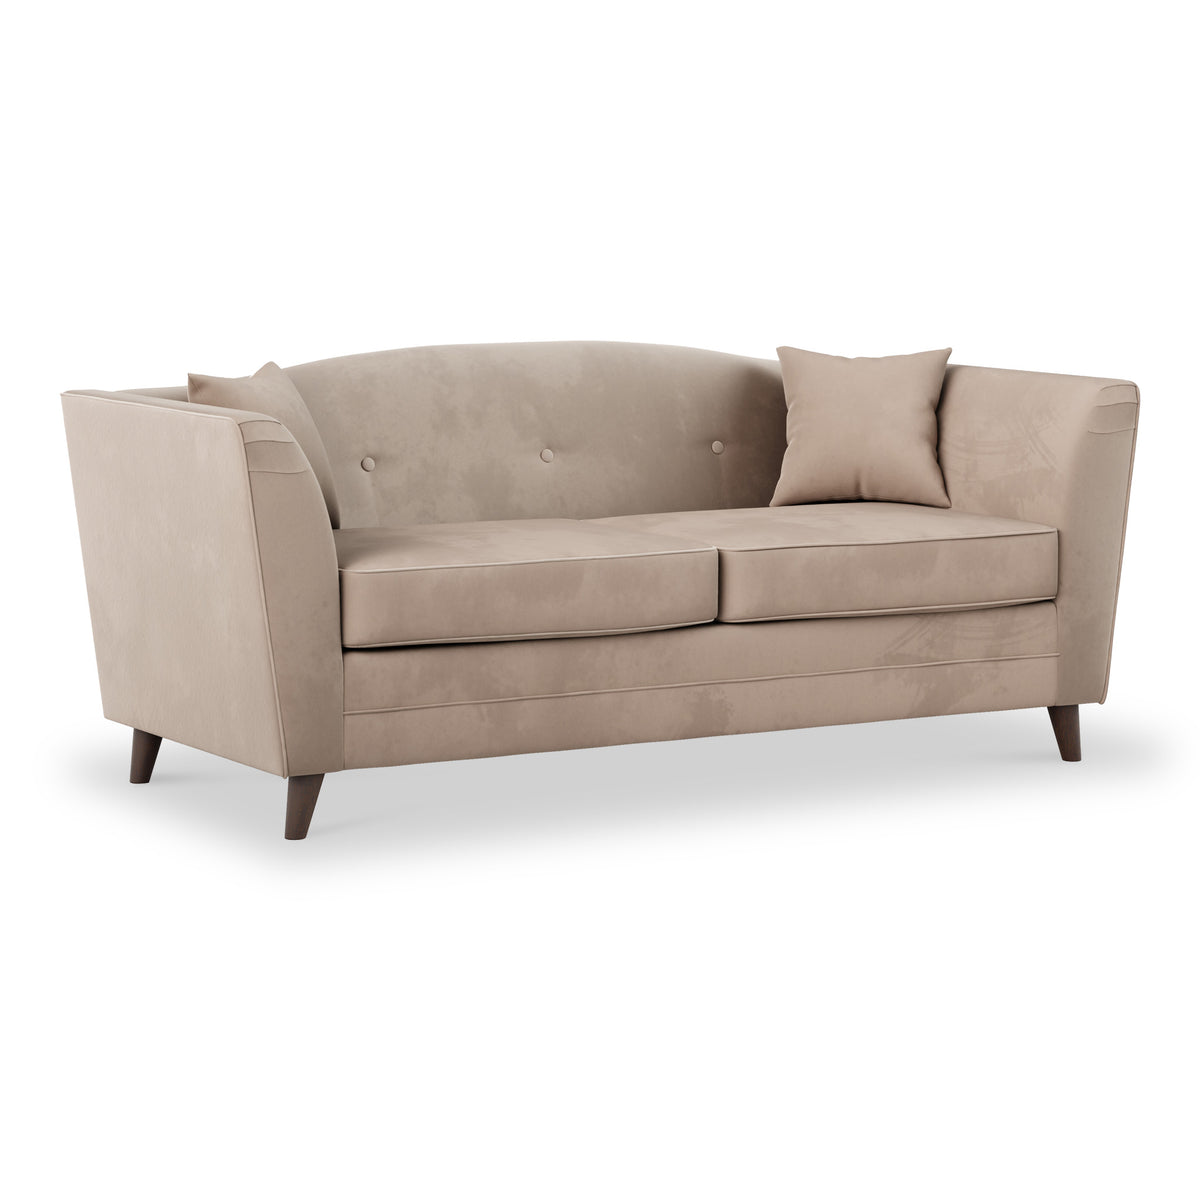 Pippa Platinum Plush Velvet 3 Seater Sofa from Roseland Furniture